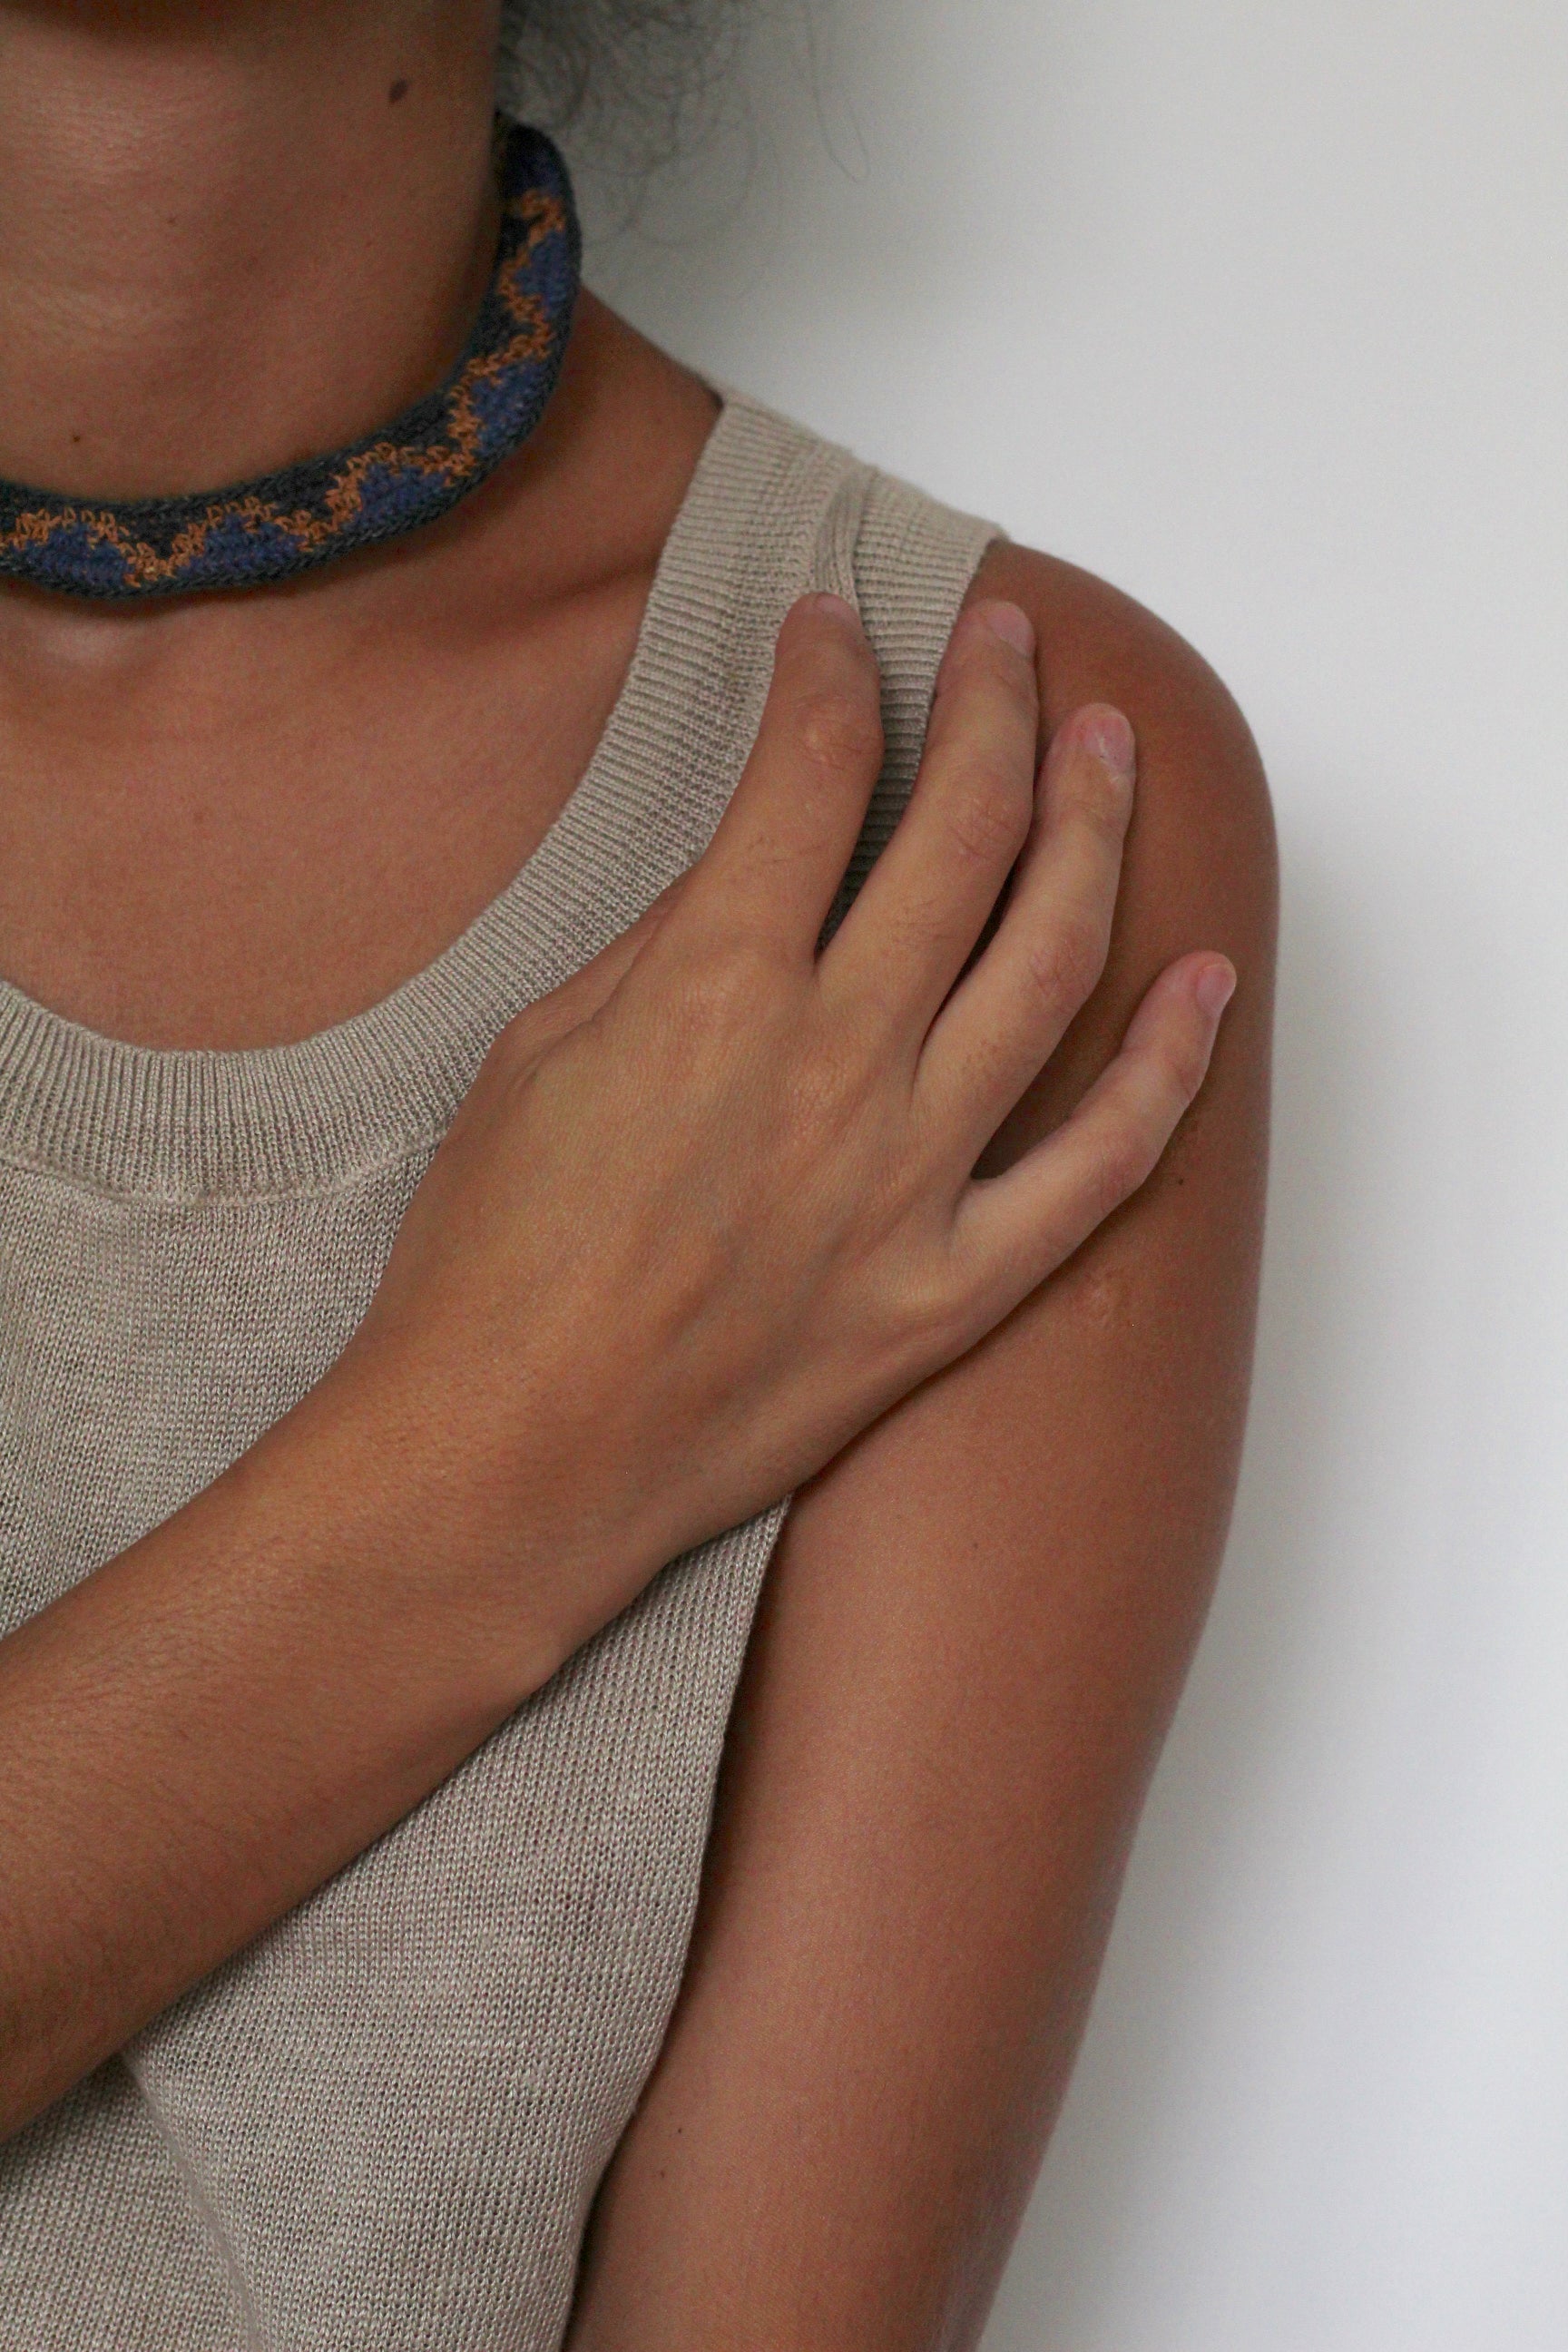 Necklace #0101 | Blue & Rust & Dark Blue